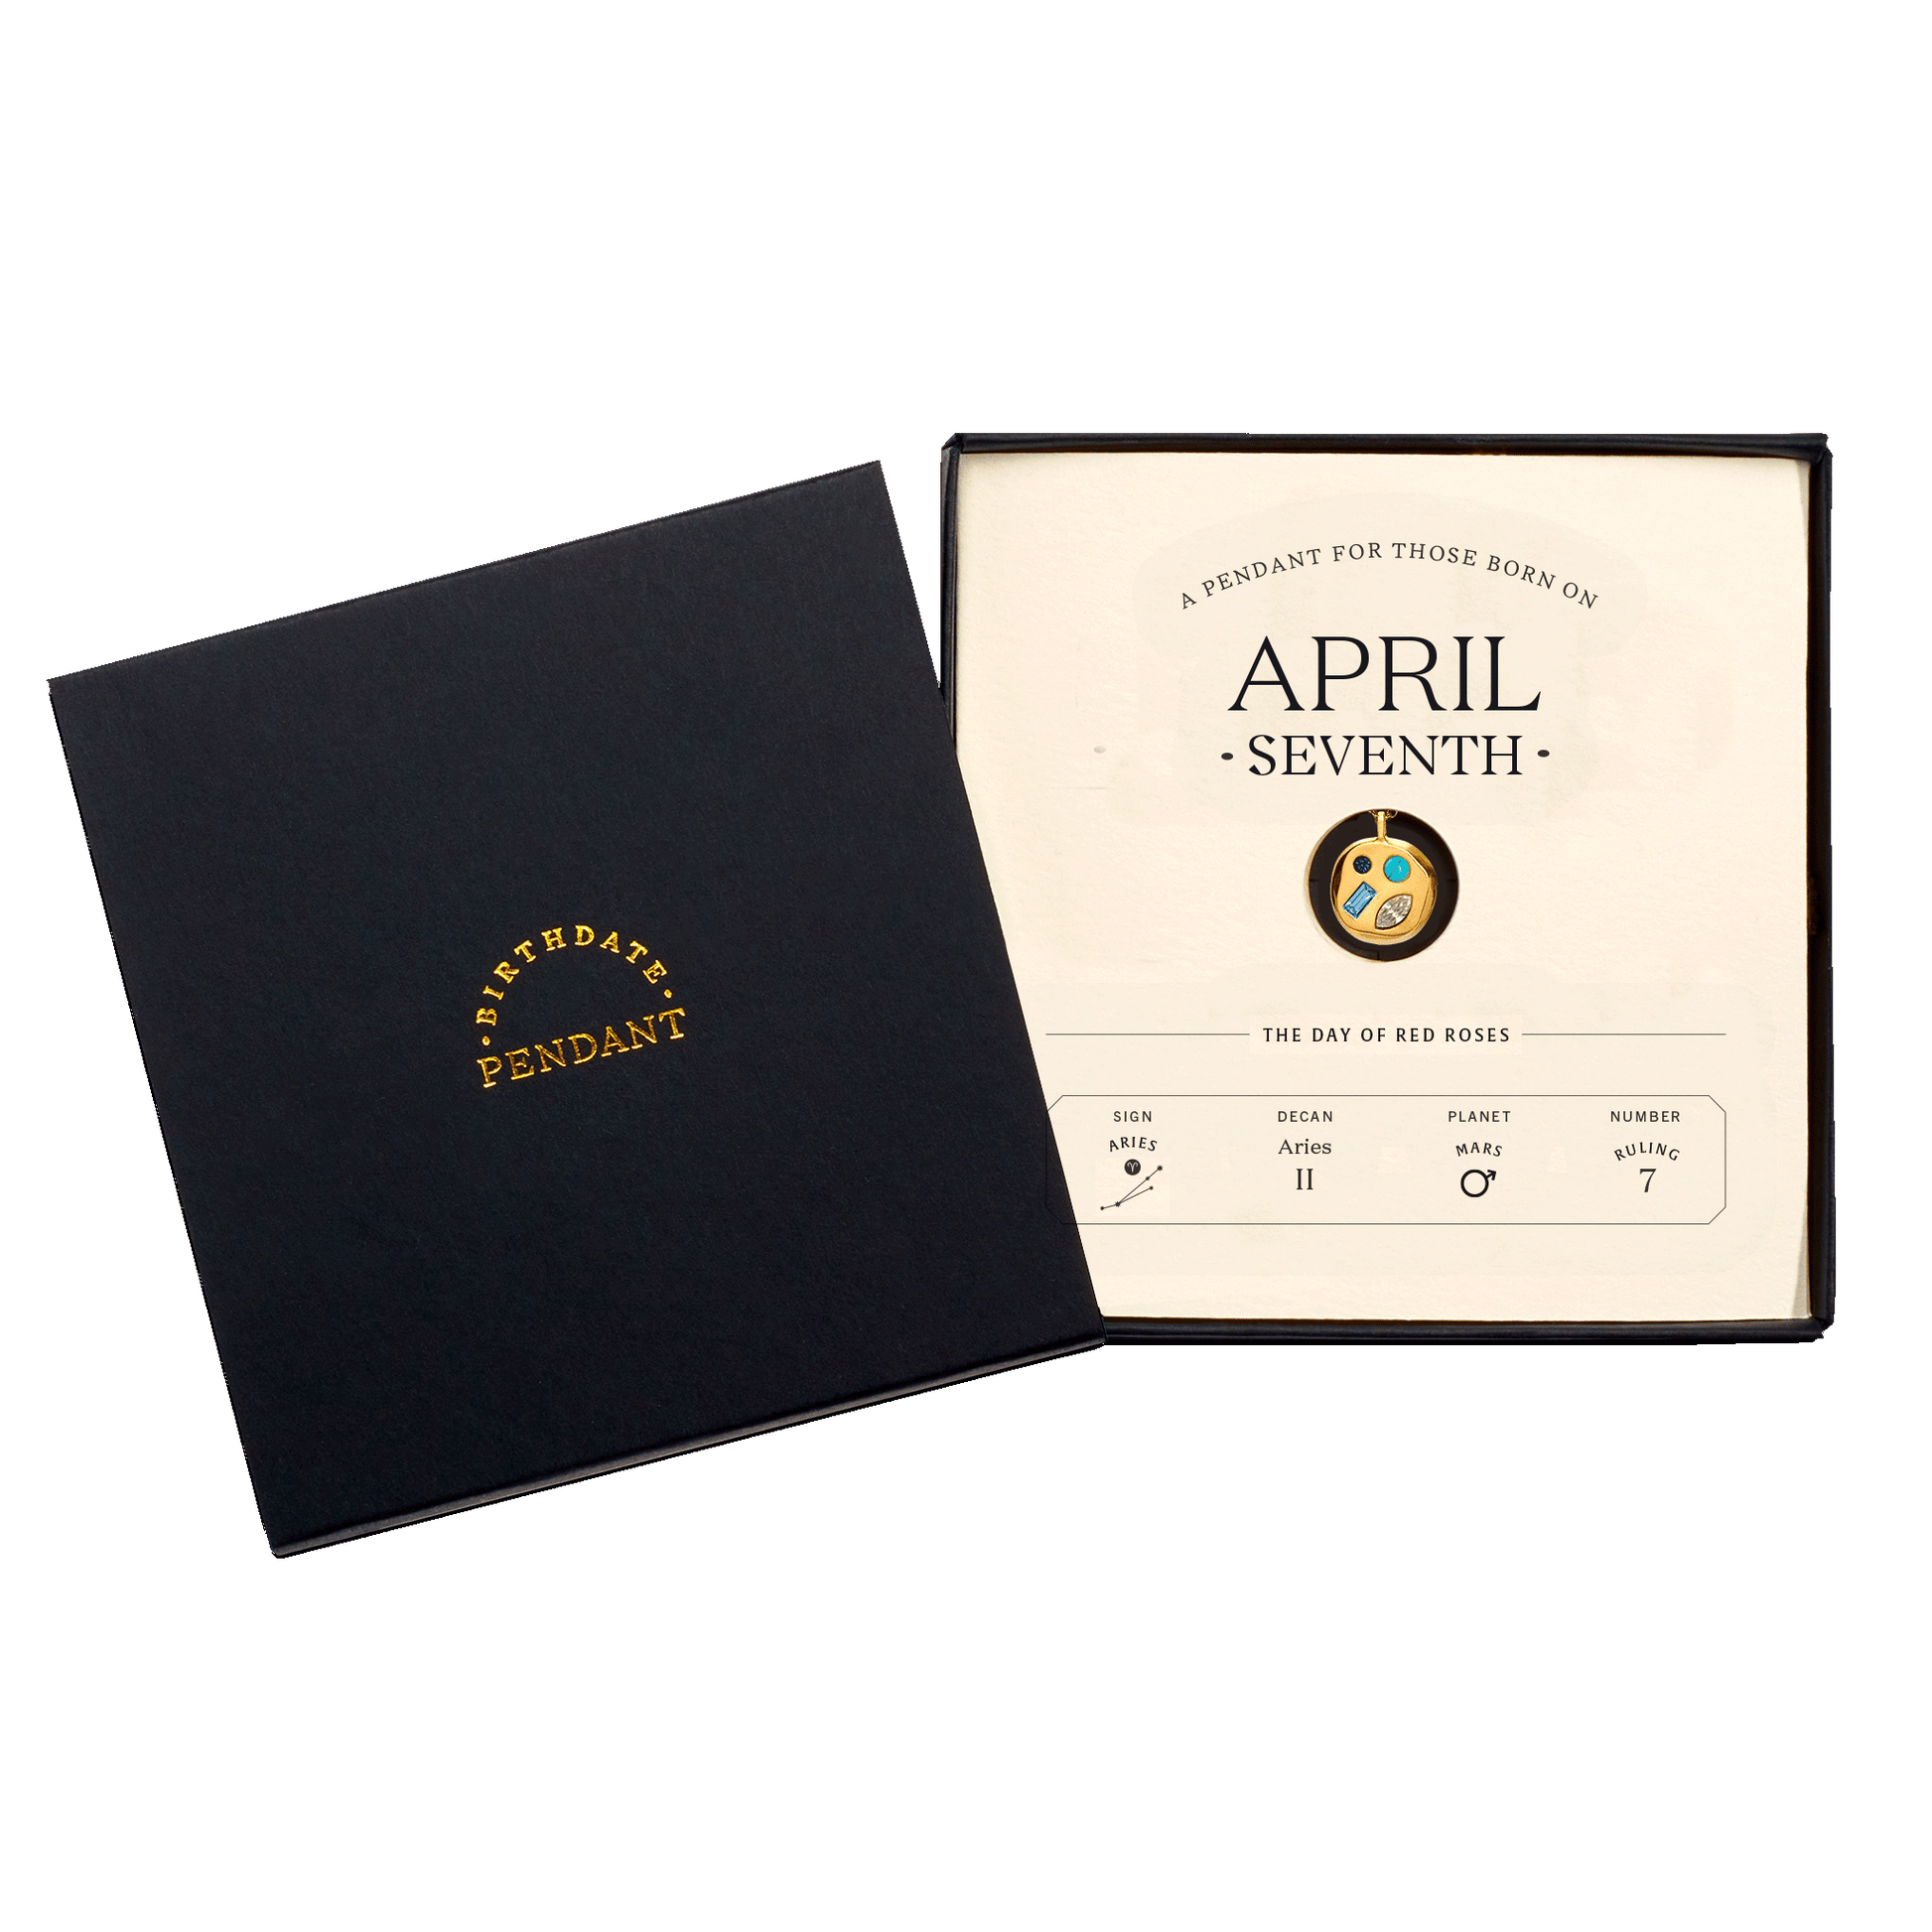 The April Seventh Pendant inside its box